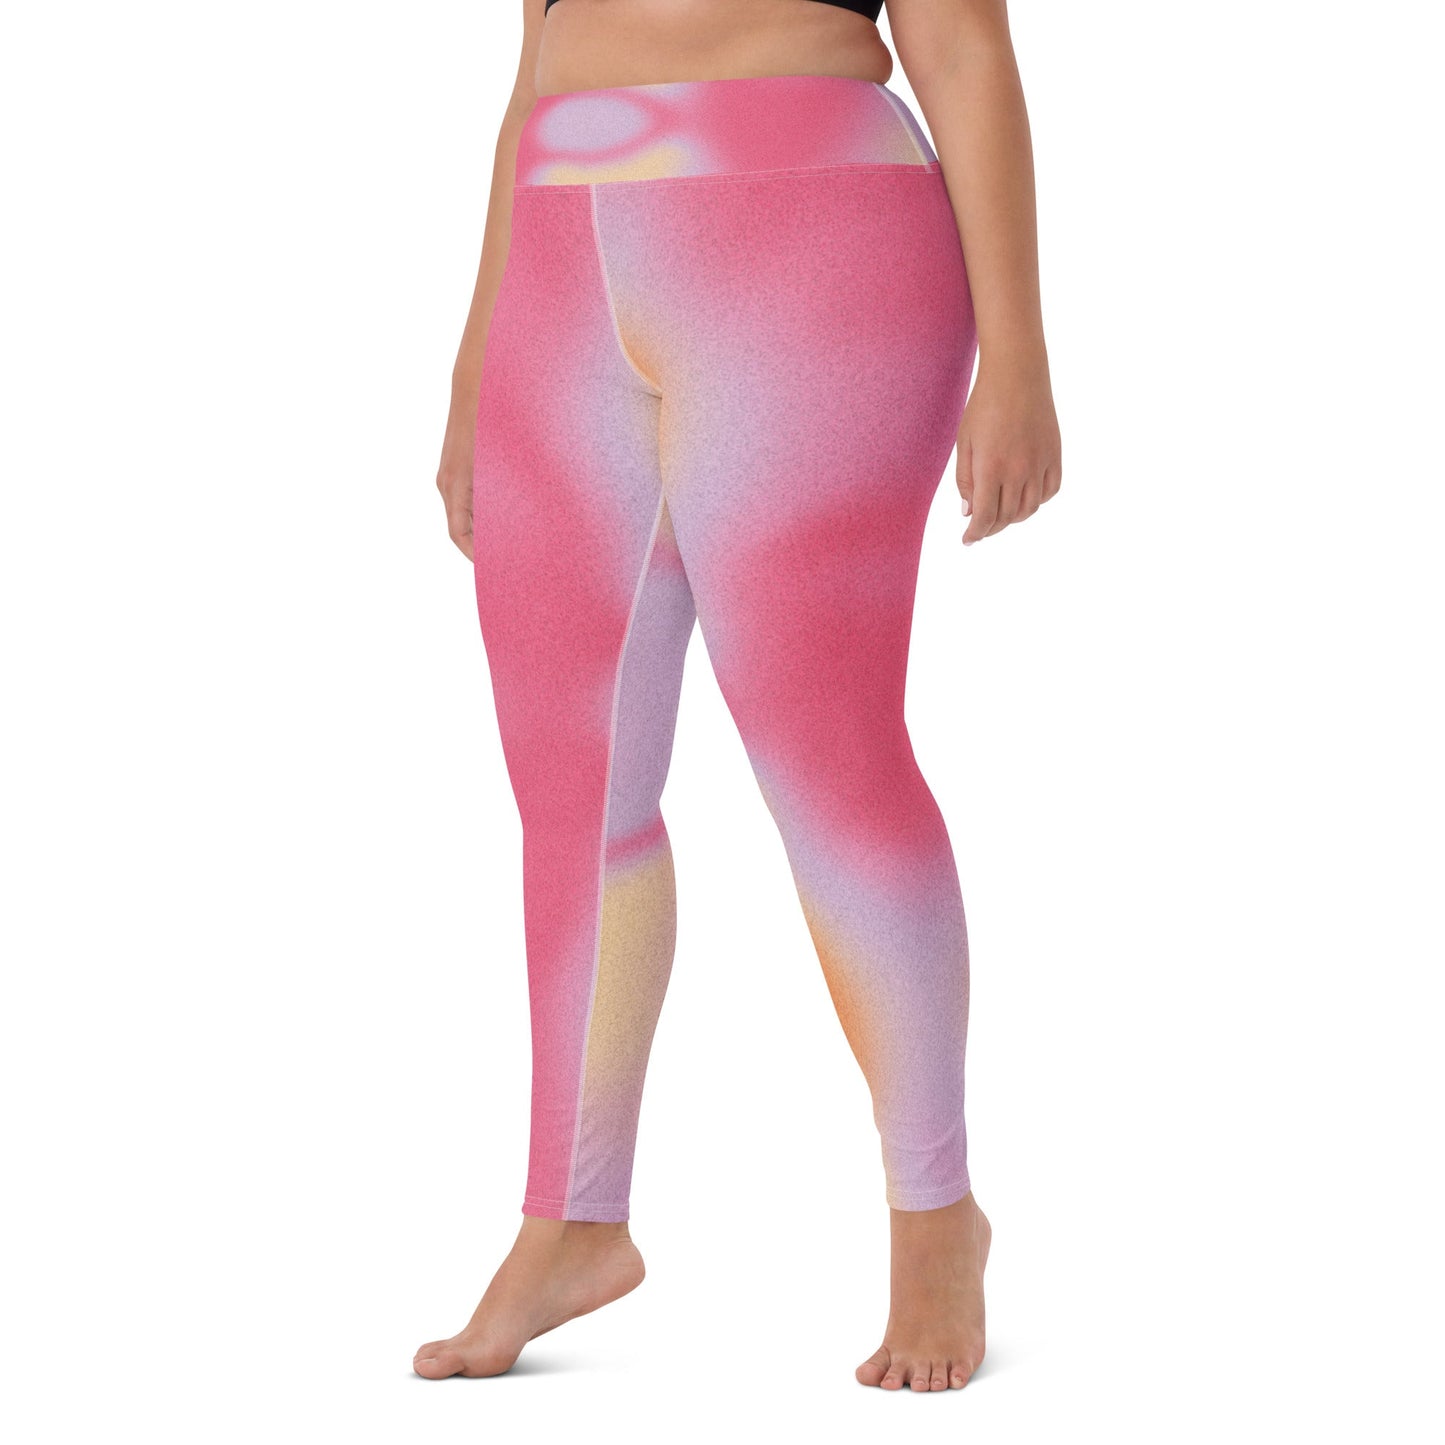 Pink Dye Yoga Leggings - Elevate Your Practice in Style